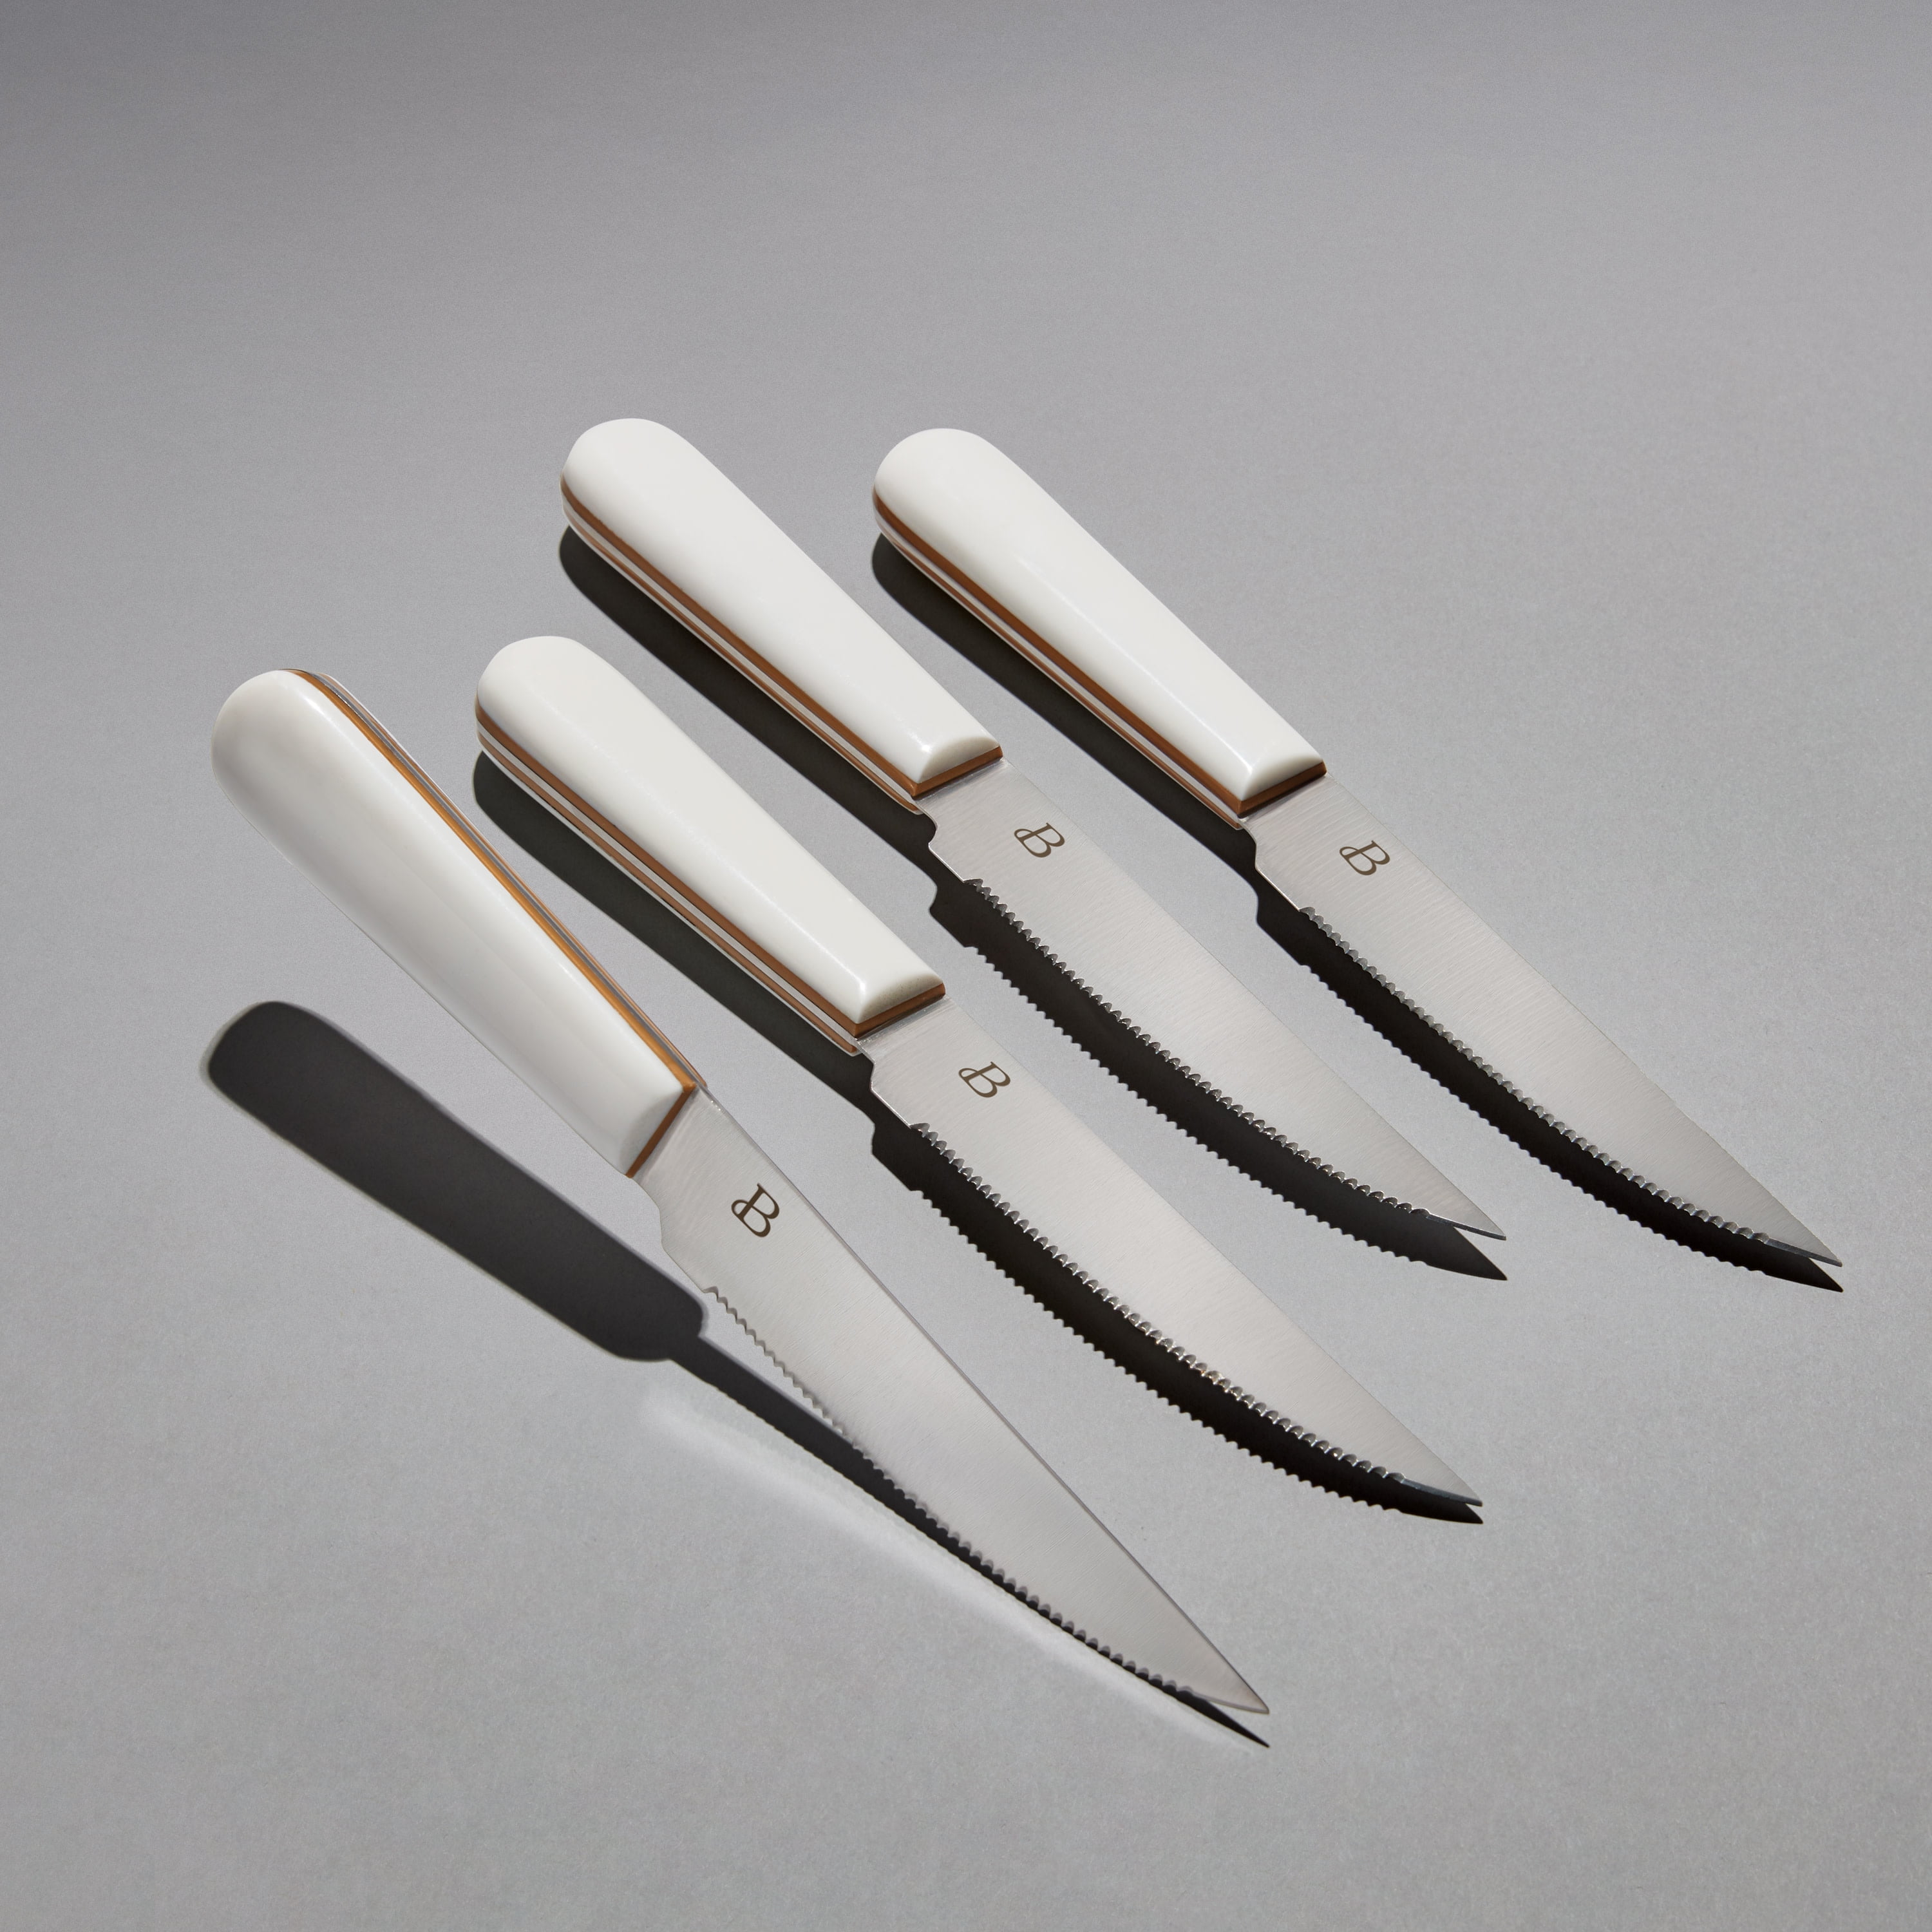 Kitchen Knives Gift Set - 4 Serrated Steak Knives 5' Set in Wooden Box –  Steakman